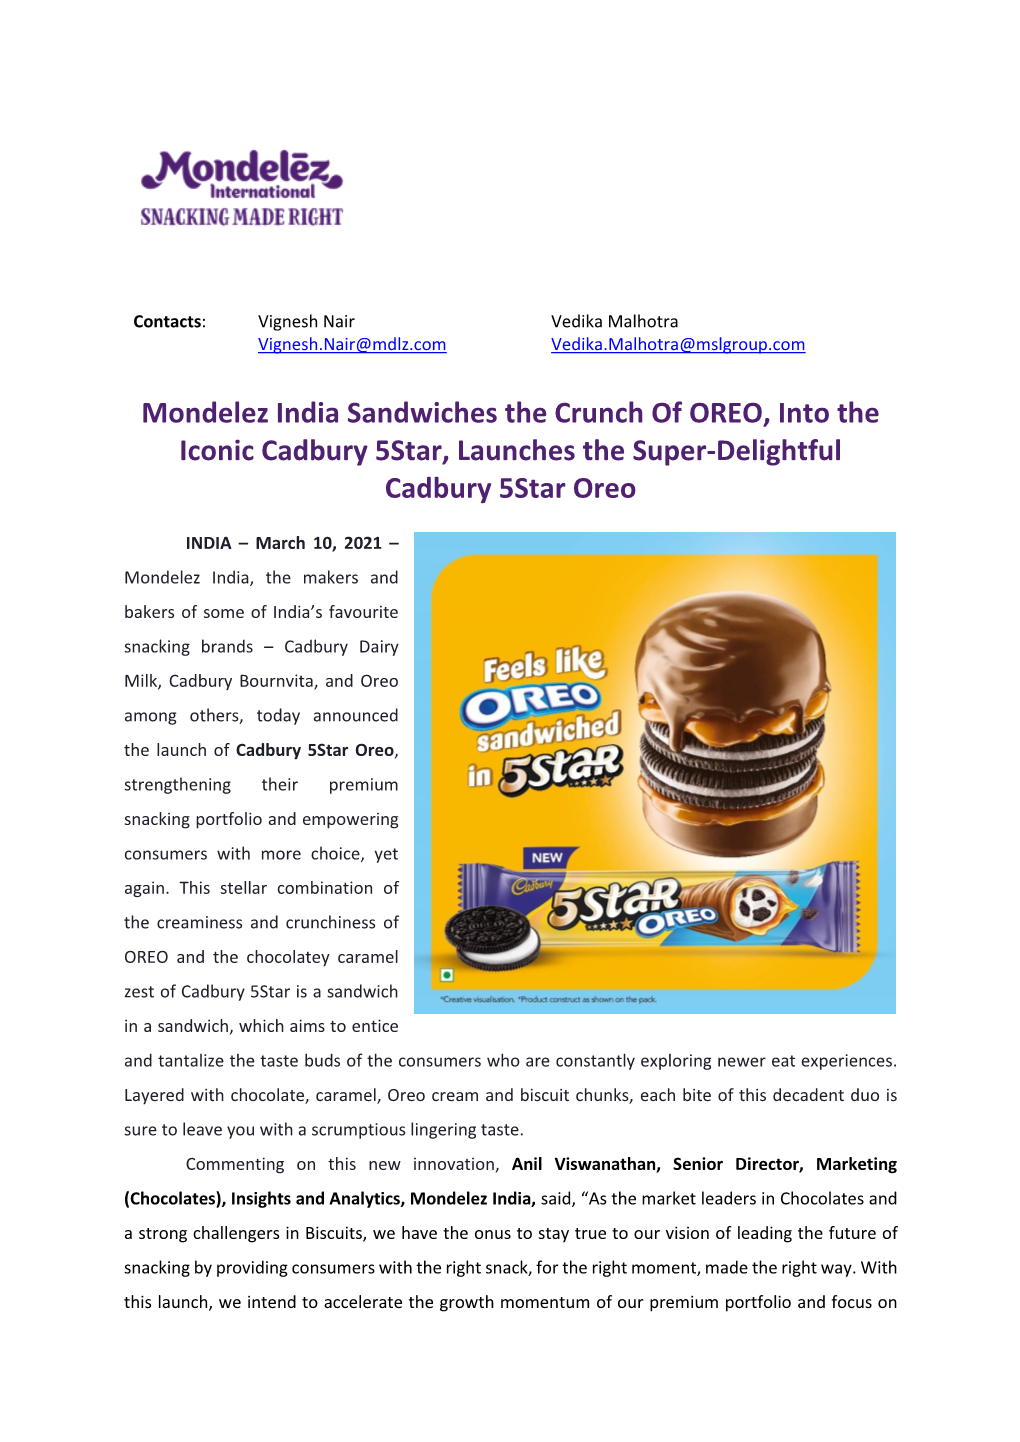 Mondelez India Sandwiches the Crunch of OREO, Into the Iconic Cadbury 5Star, Launches the Super-Delightful Cadbury 5Star Oreo